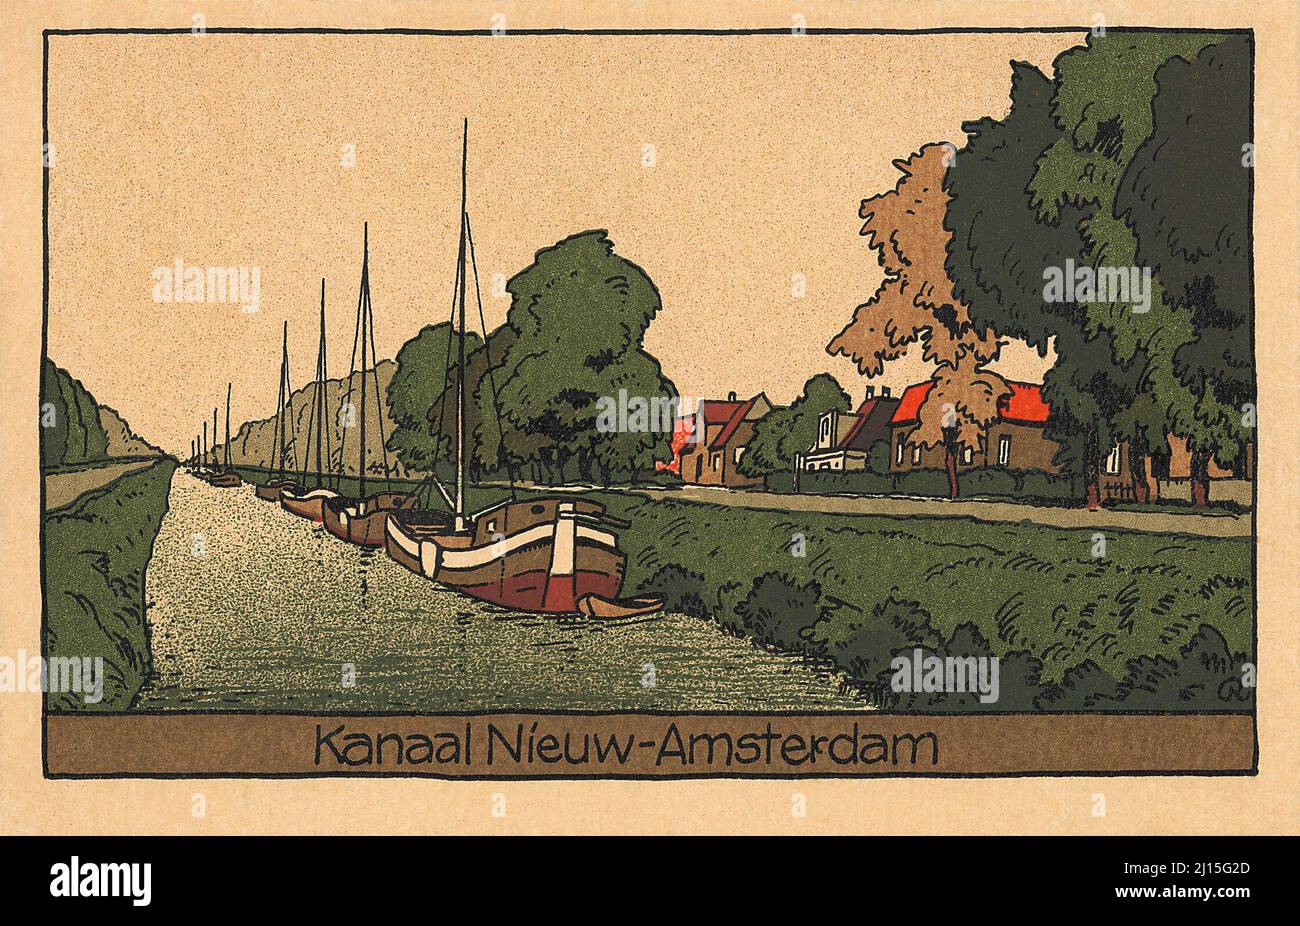 Vinatge Kanaal Nieuw, Amsterdam postcard. Stock Photo